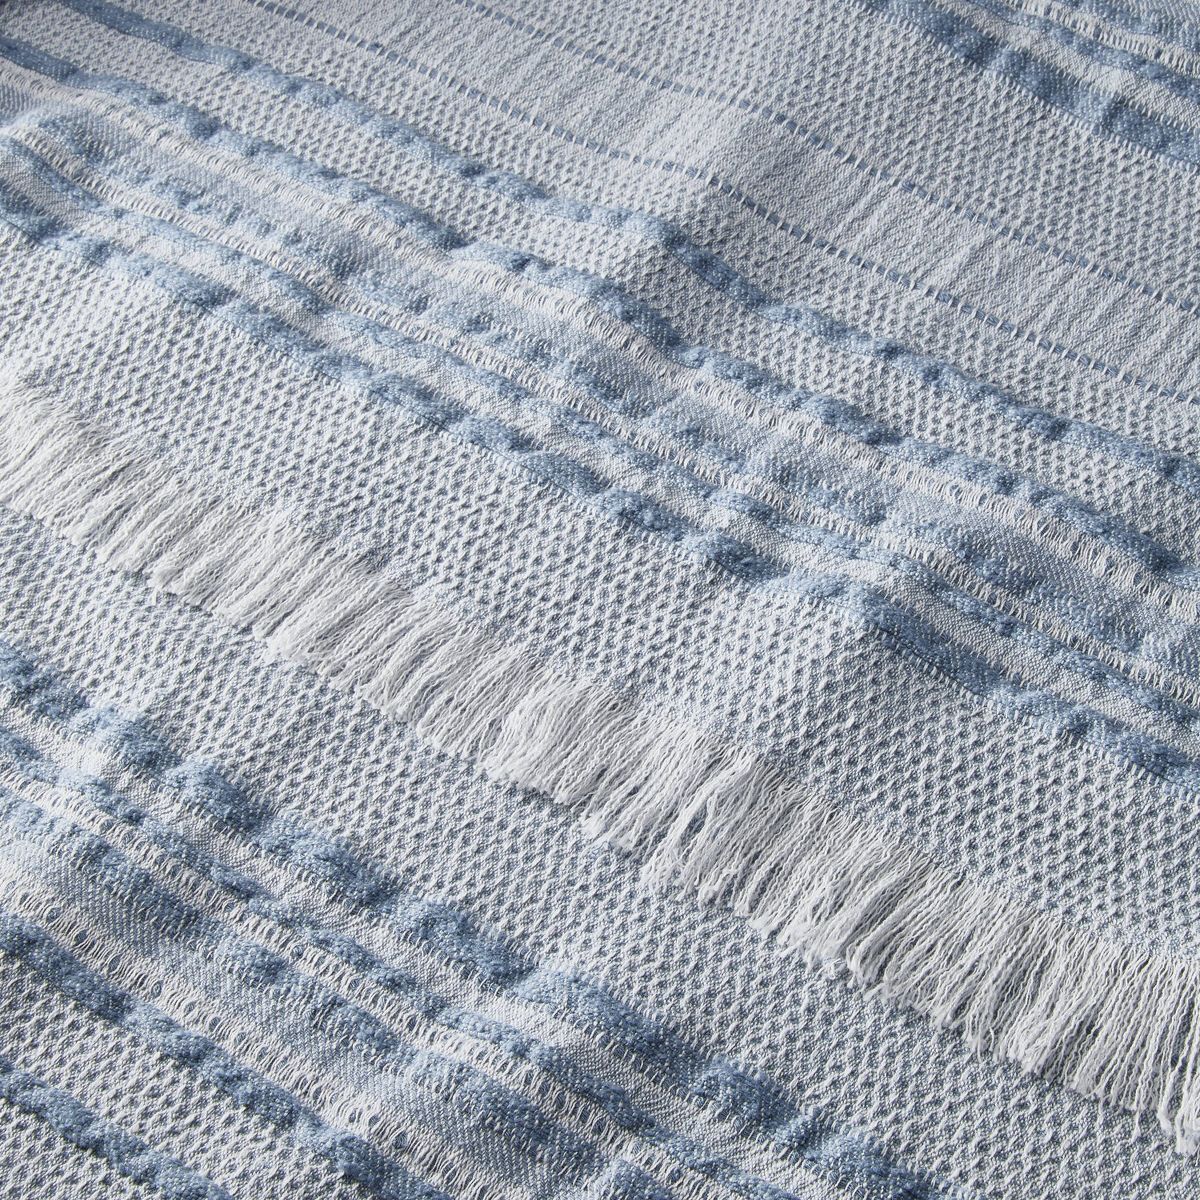 Textured Rib Stripe Dobby Throw Blanket - Hearth & Hand™ with Magnolia | Target